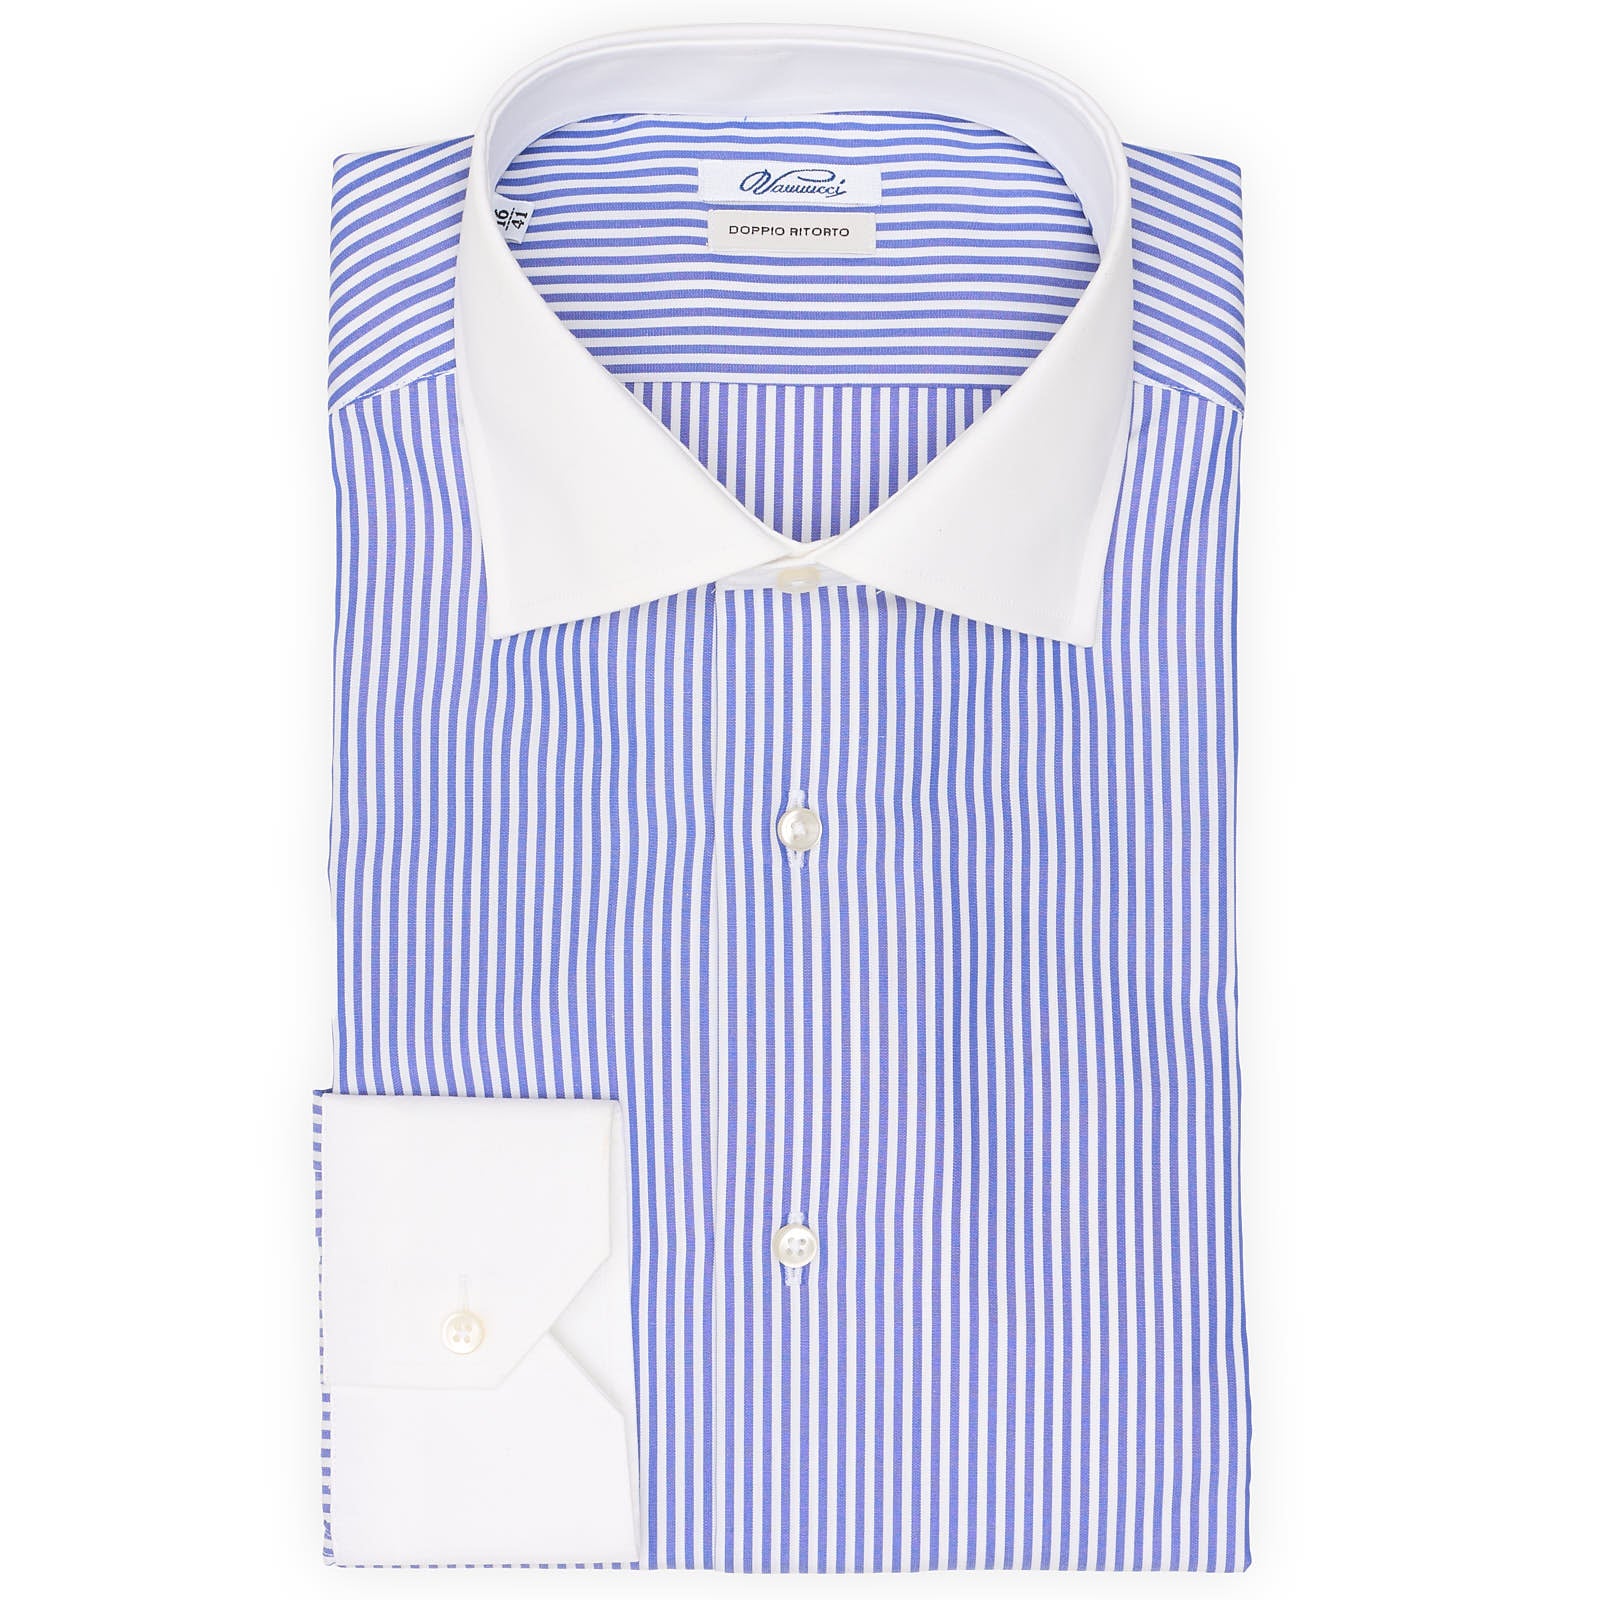 VANNUCCI Milano Delft Blue Bengal Striped Cotton Dress Shirt EU 41 NEW US 16